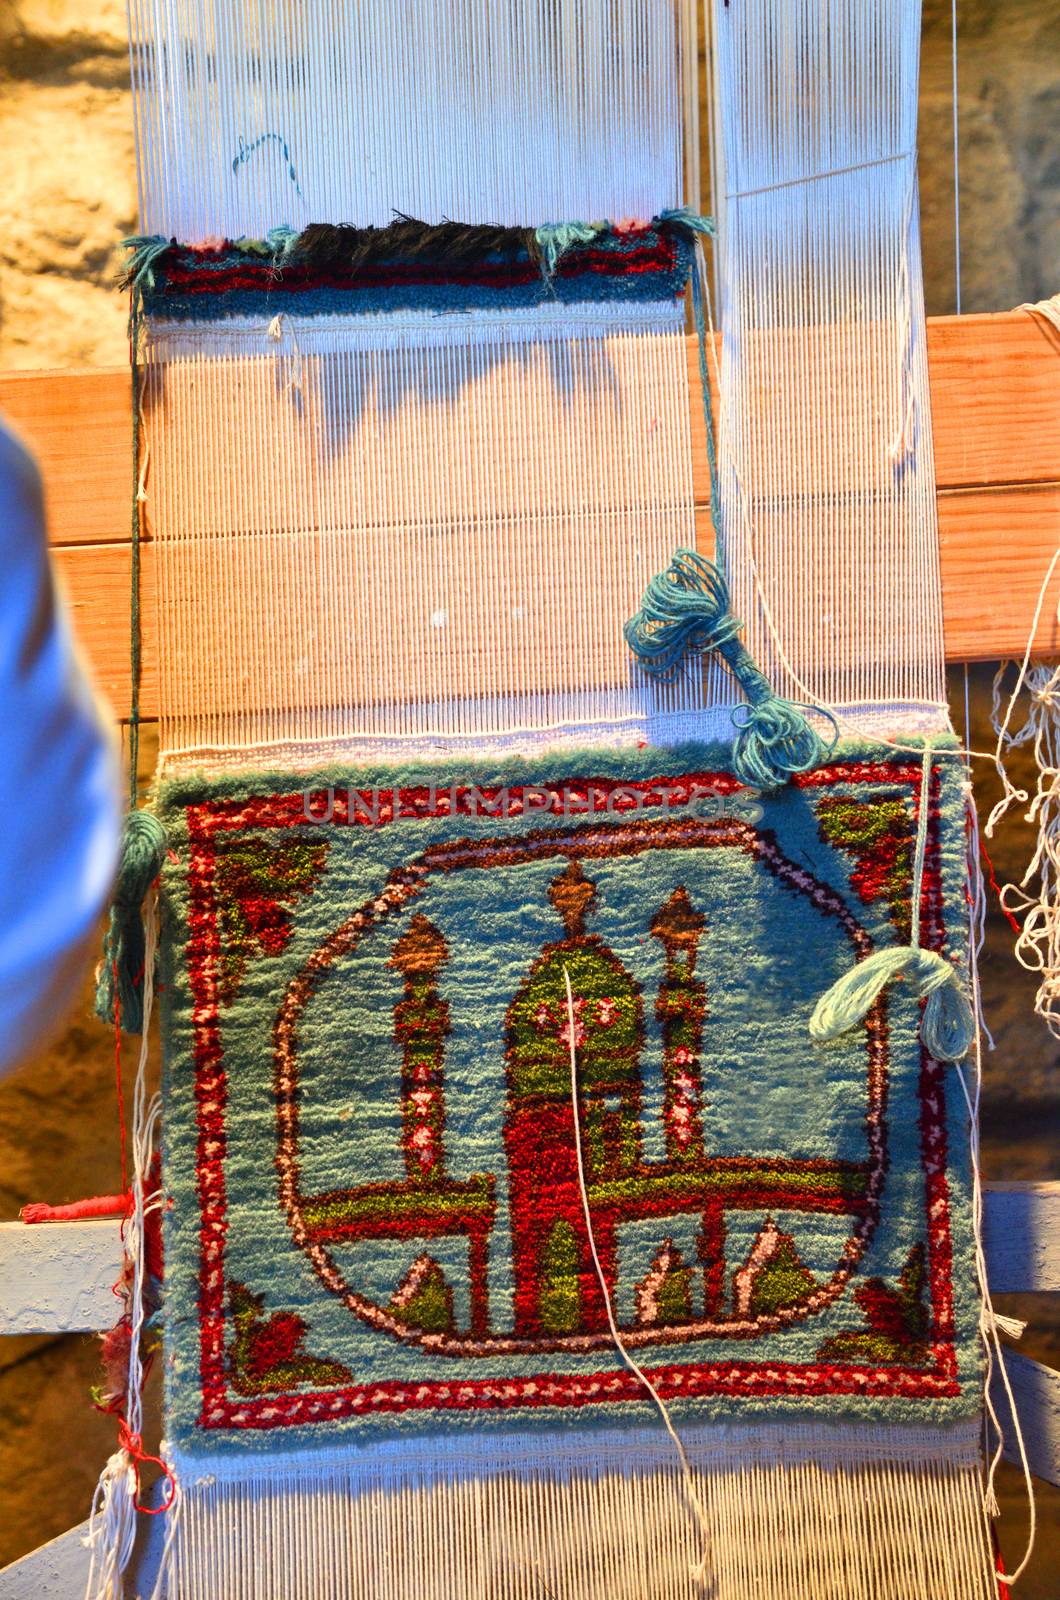 Carpet Knitting Accessories, Azerbaijan, Baku by moviephoto